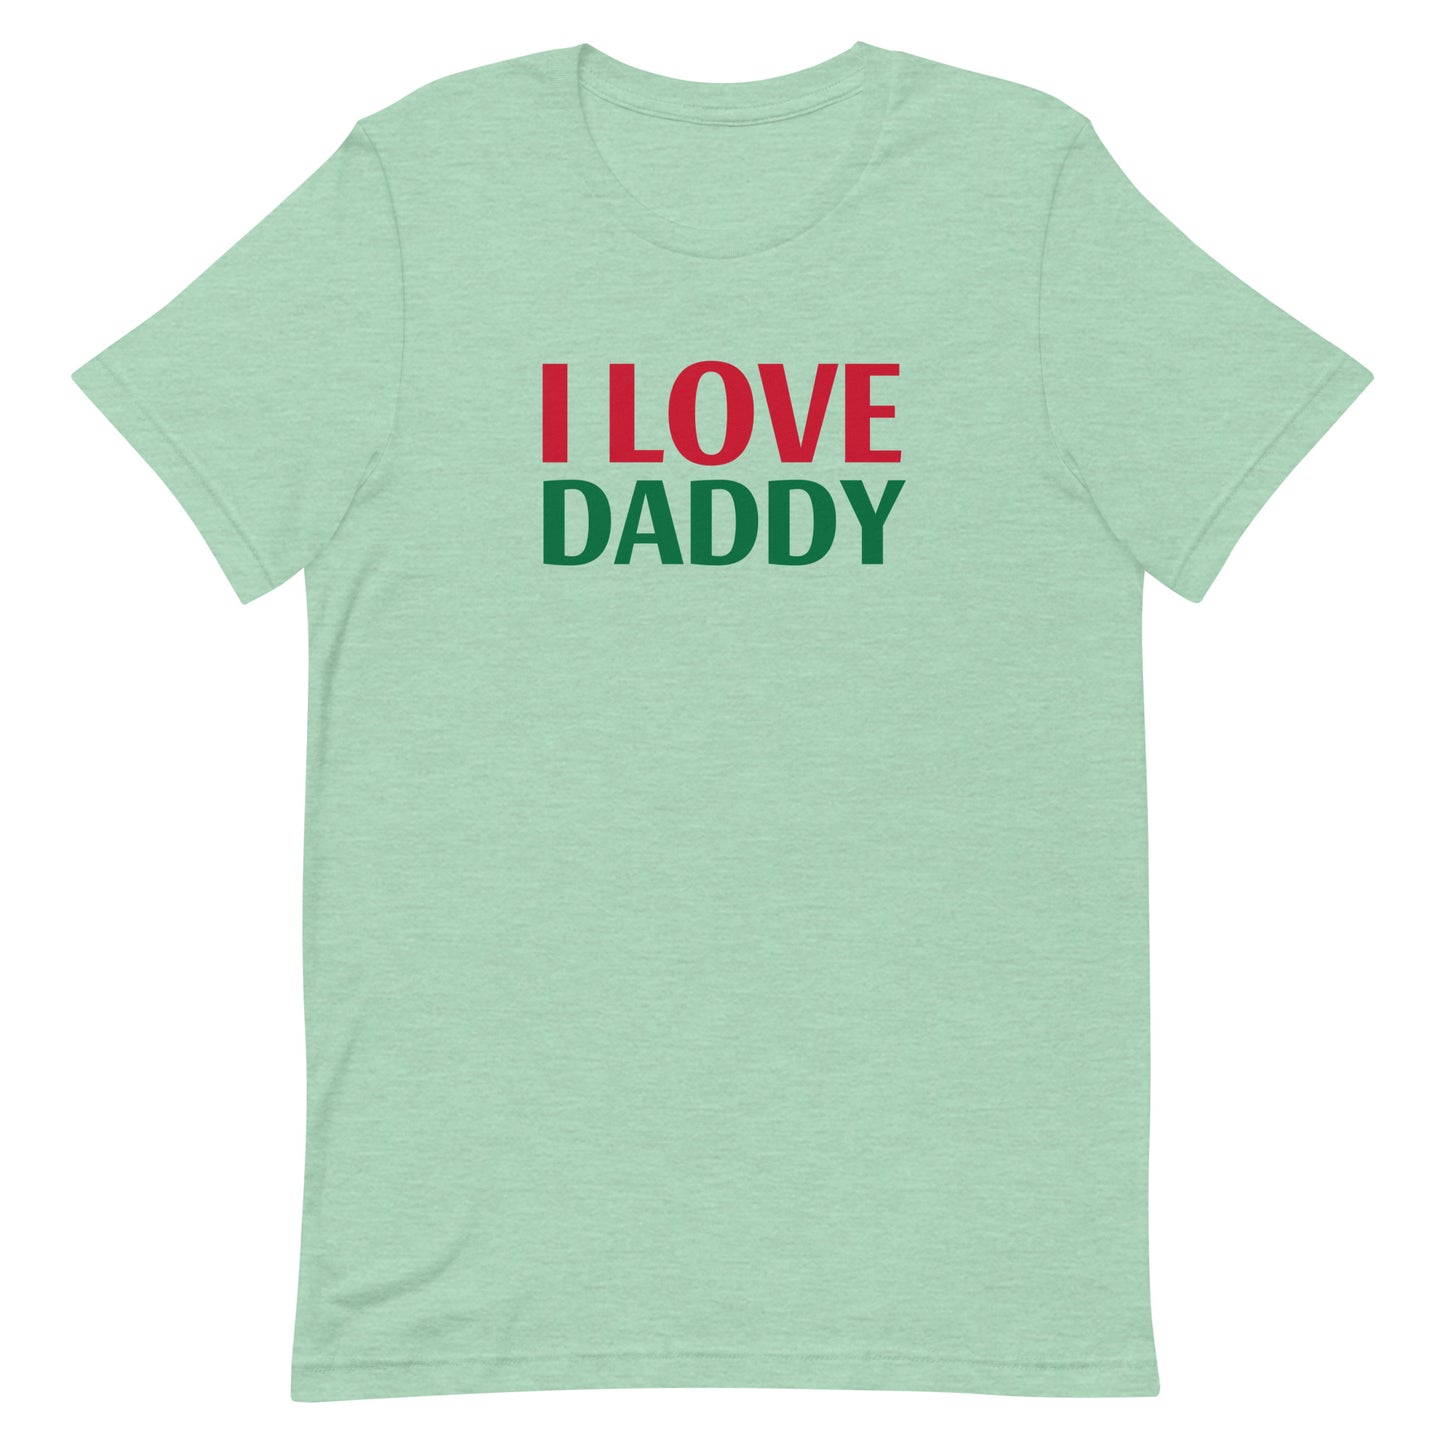 I LOVE DADDY Unisex t-shirt